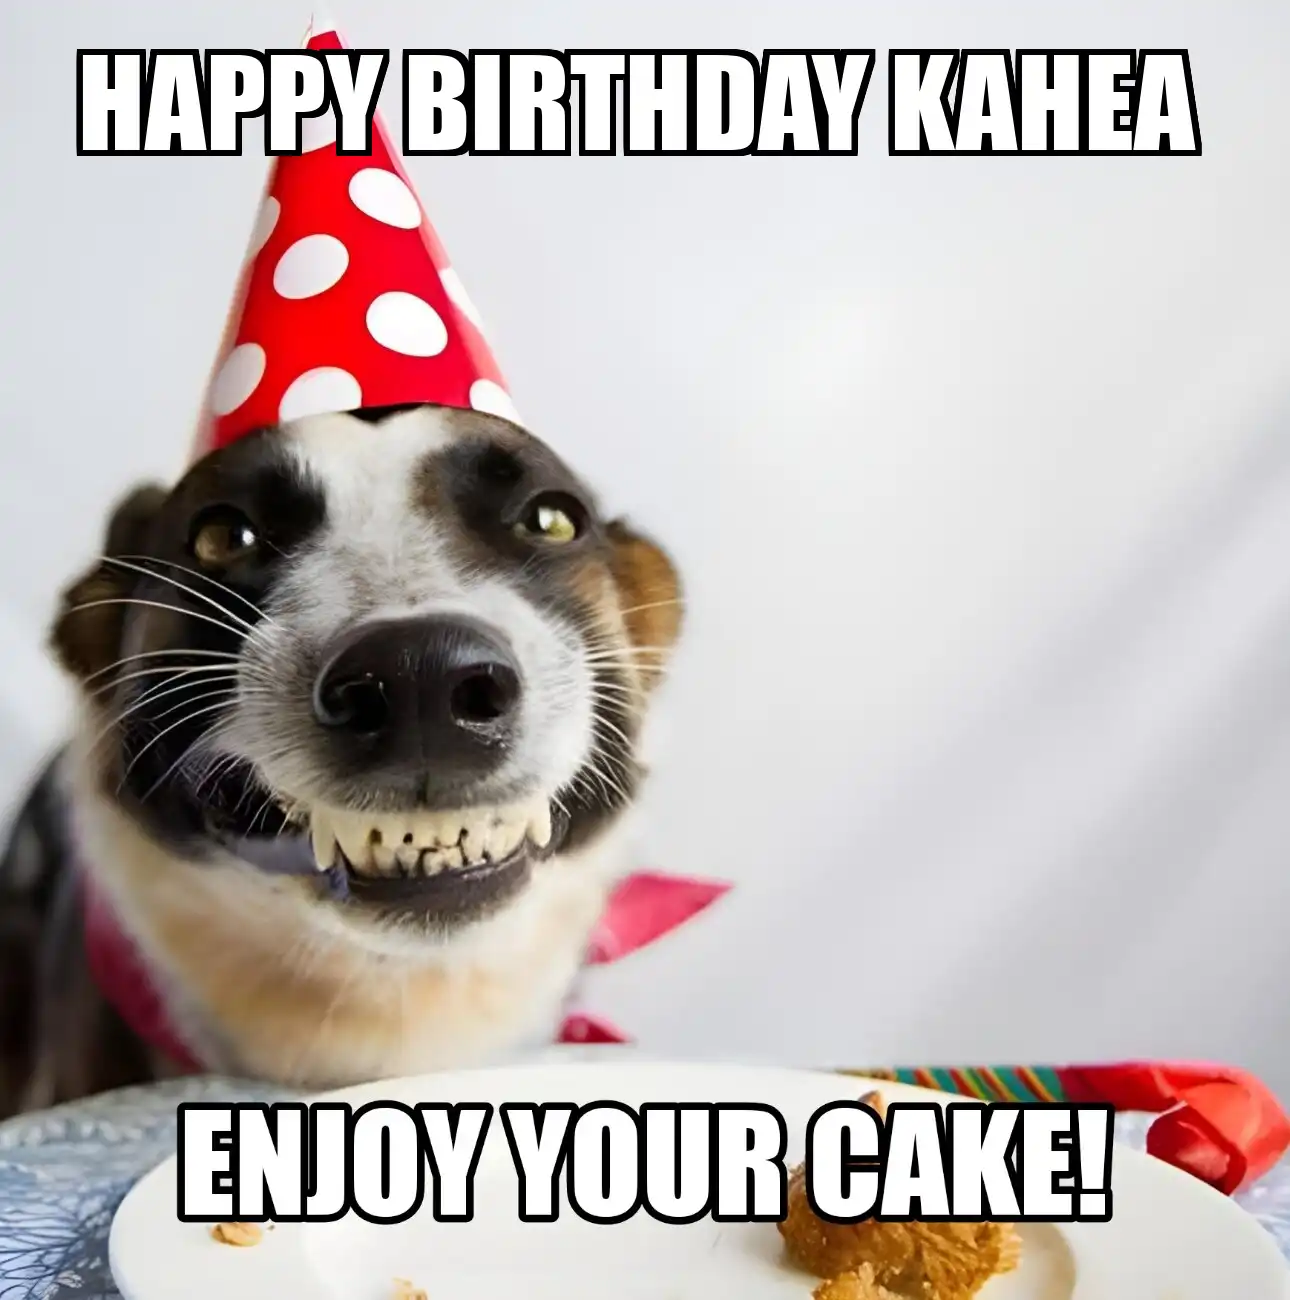 Happy Birthday Kahea Enjoy Your Cake Dog Meme